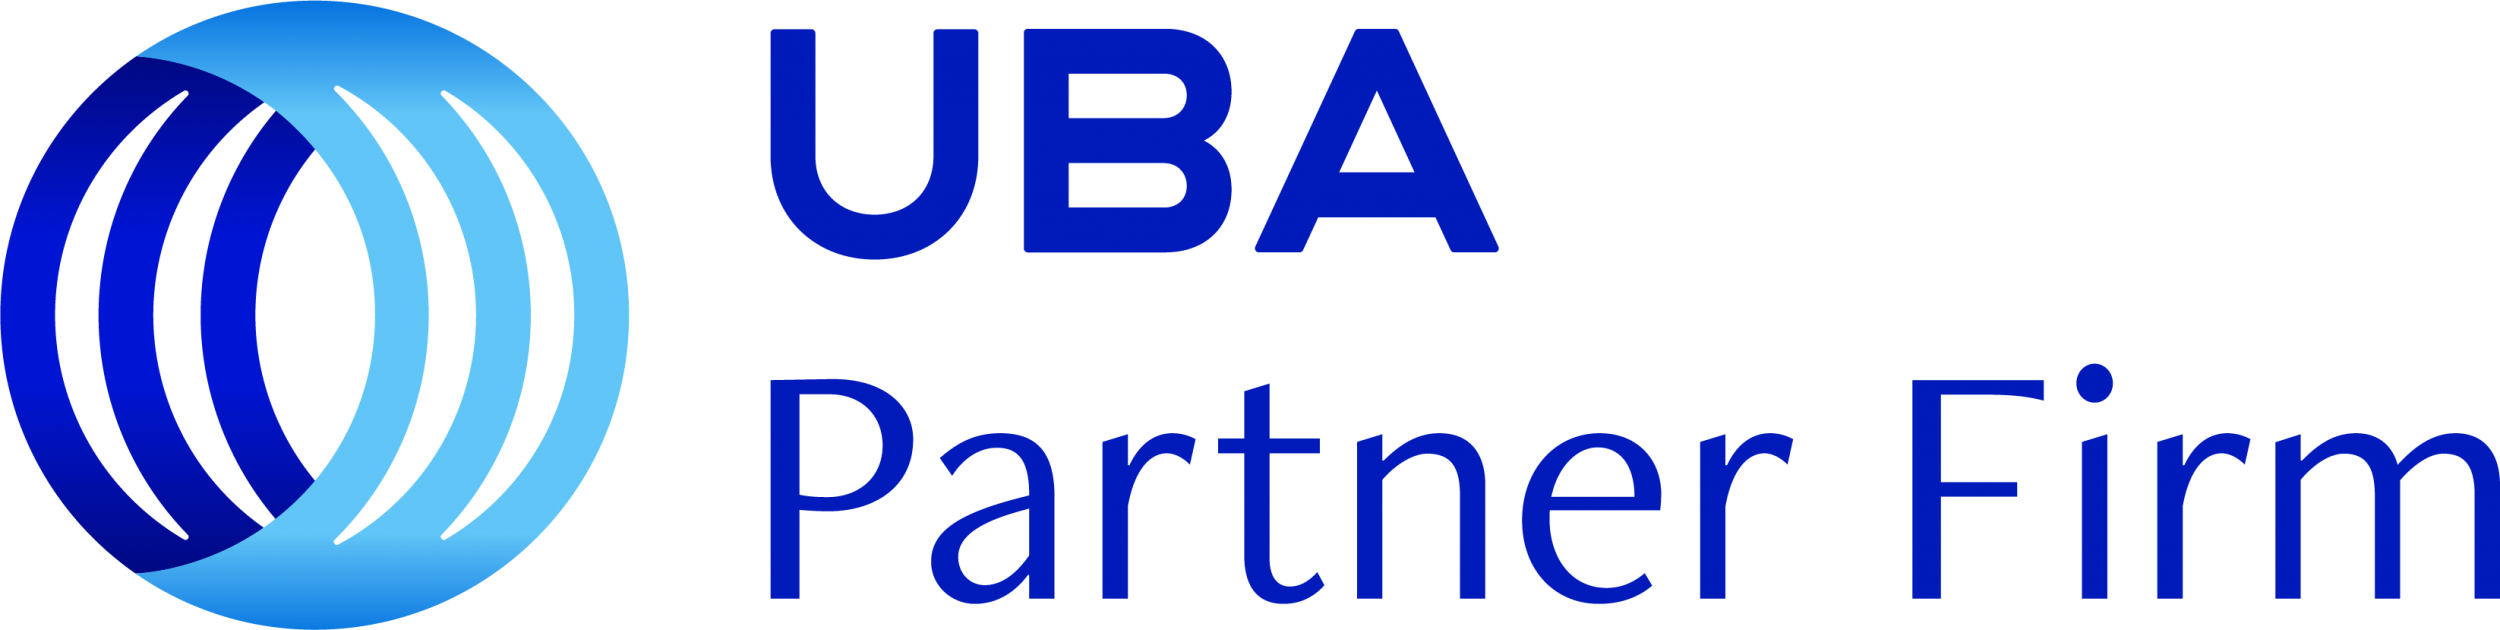 UBA Partner Firm logo